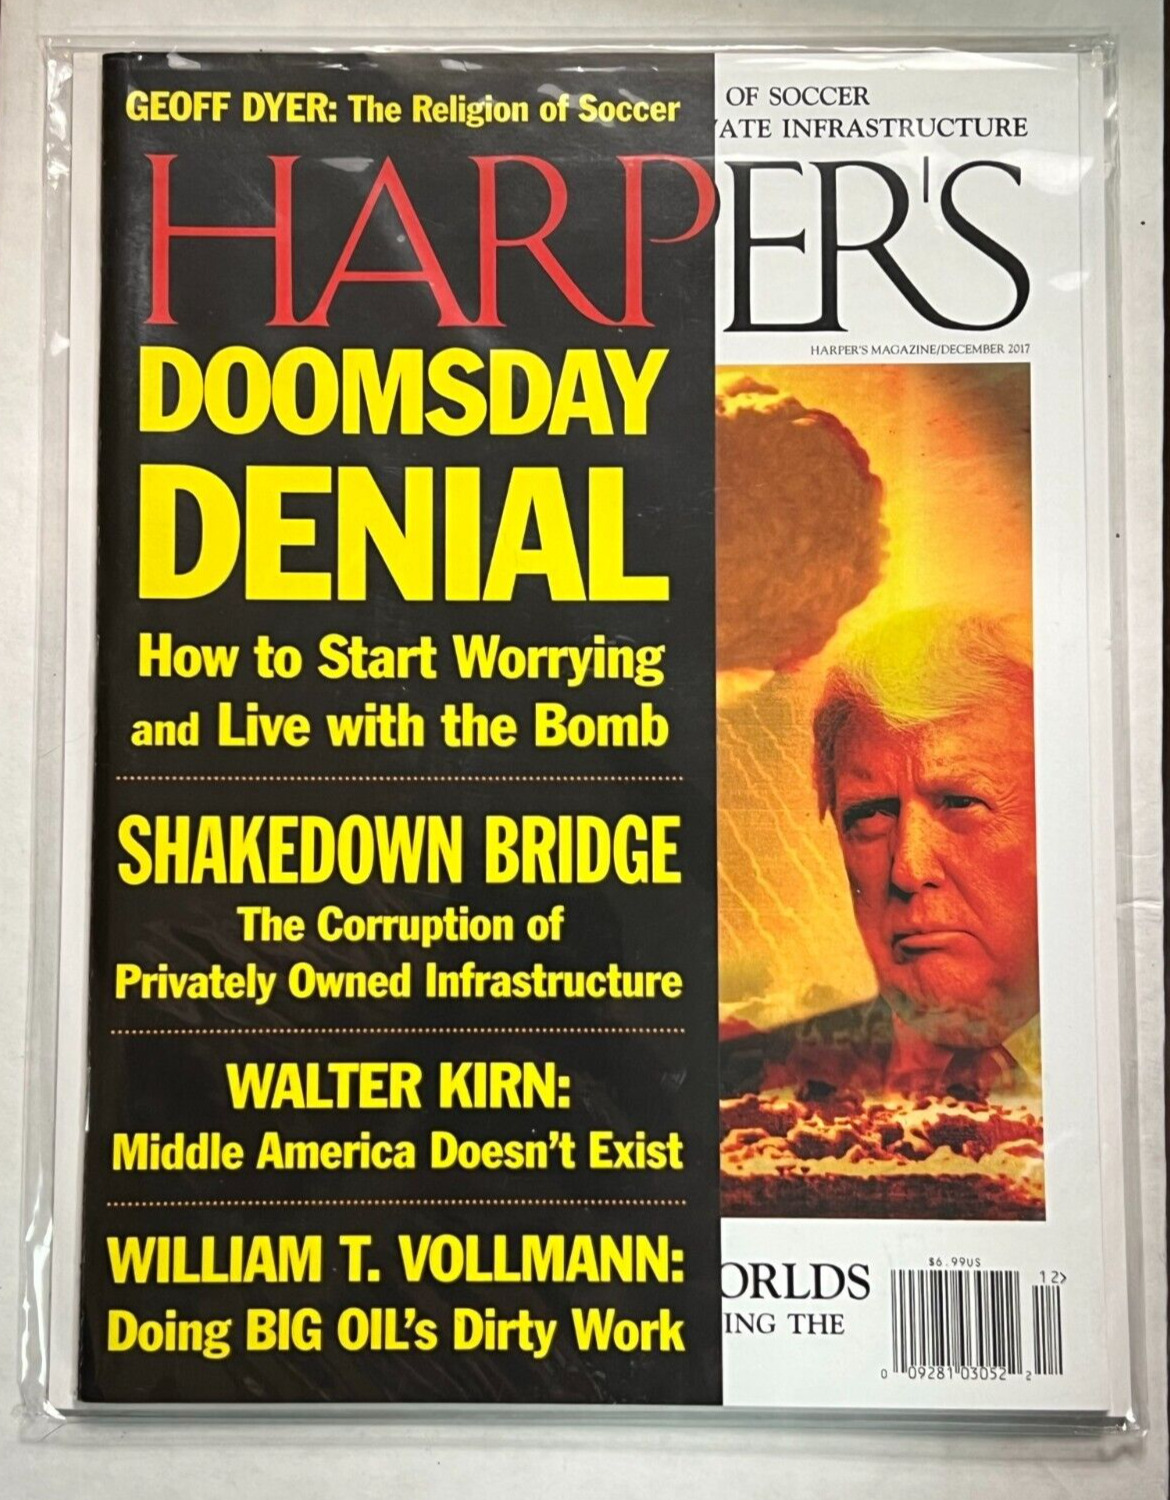 Trump Harpers Magazine December 2017 Trump MAGAZINE